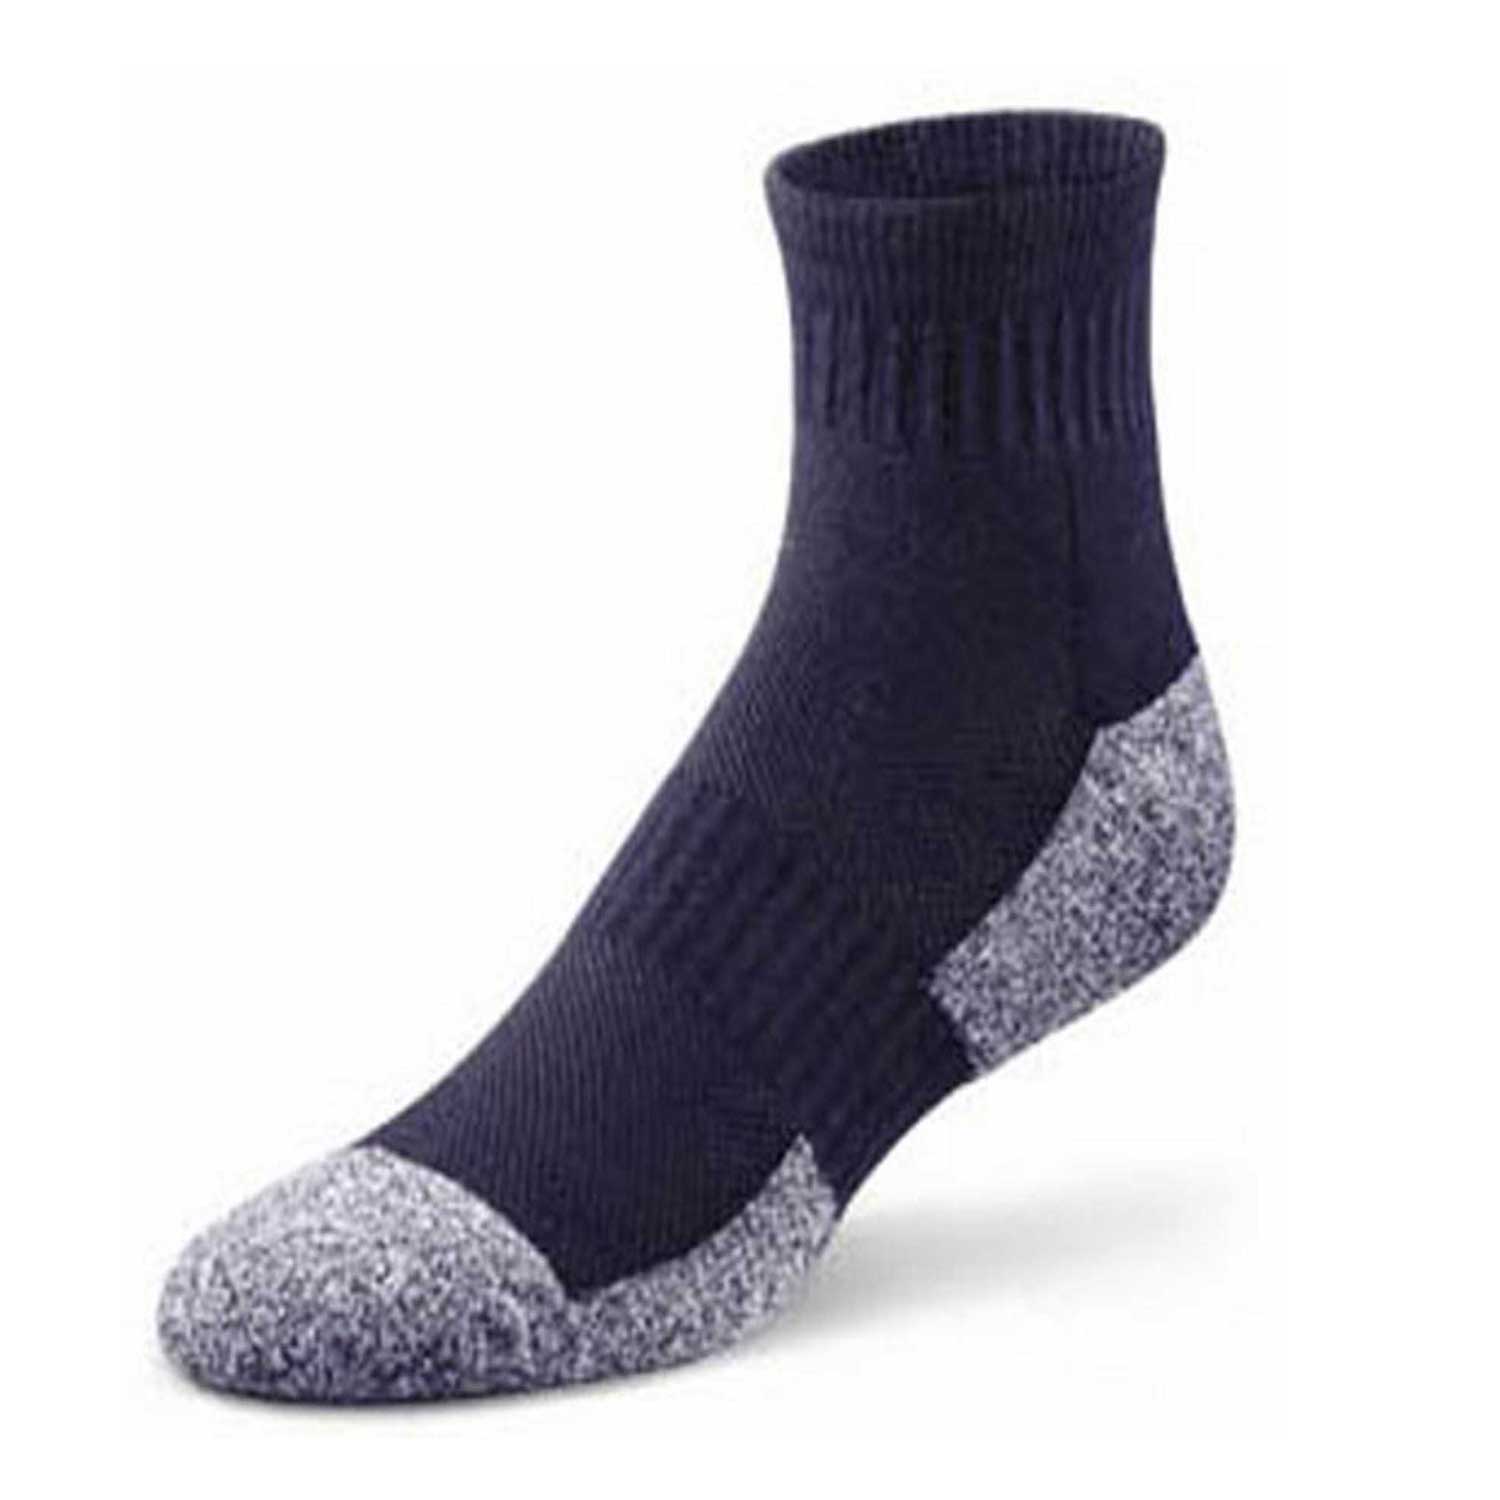 Dr. Comfort Ankle Socks (1 Pair) - Women's Orthopedic Diabetic Socks - Athletic, Casual, Dress